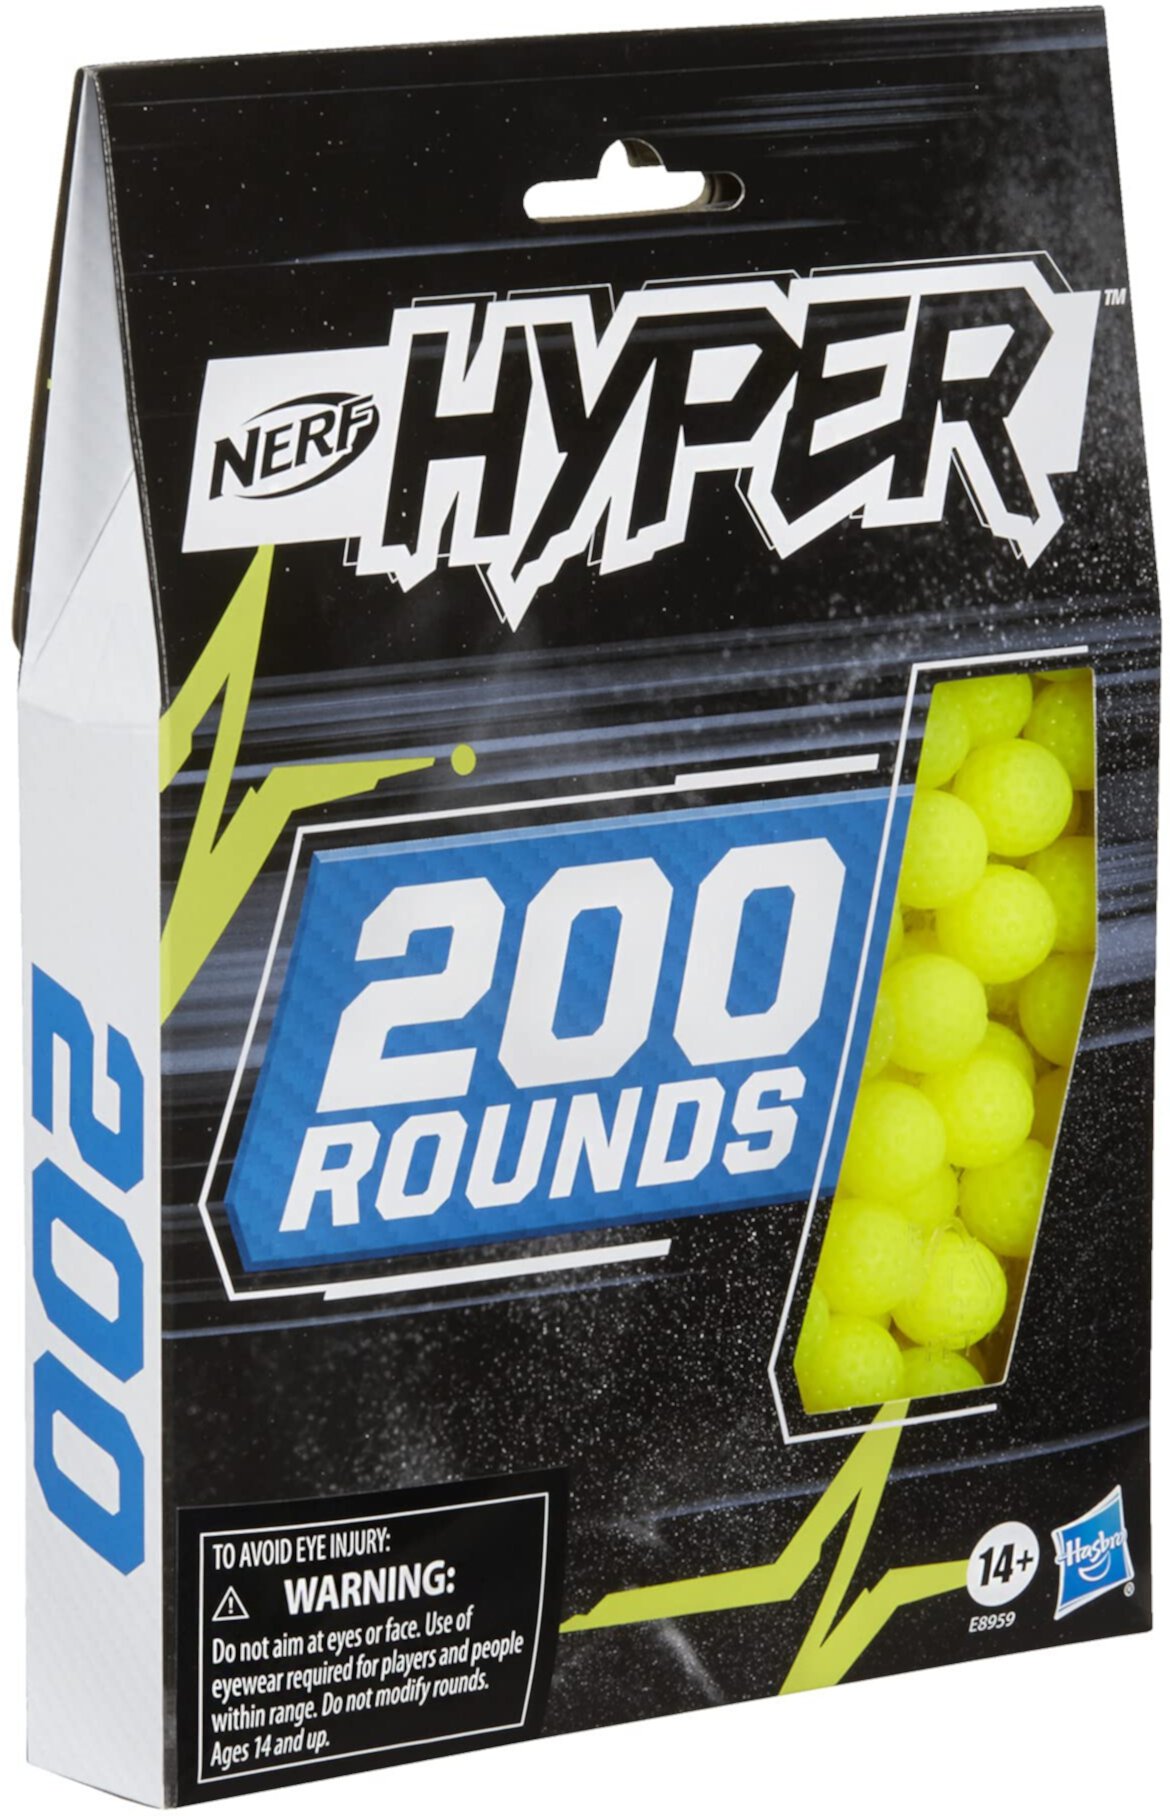 NERF Hyper 200-Round Refill включает 200 Hyper Rounds для использования Hyper Blasters, запаситесь Hyper Games Nerf